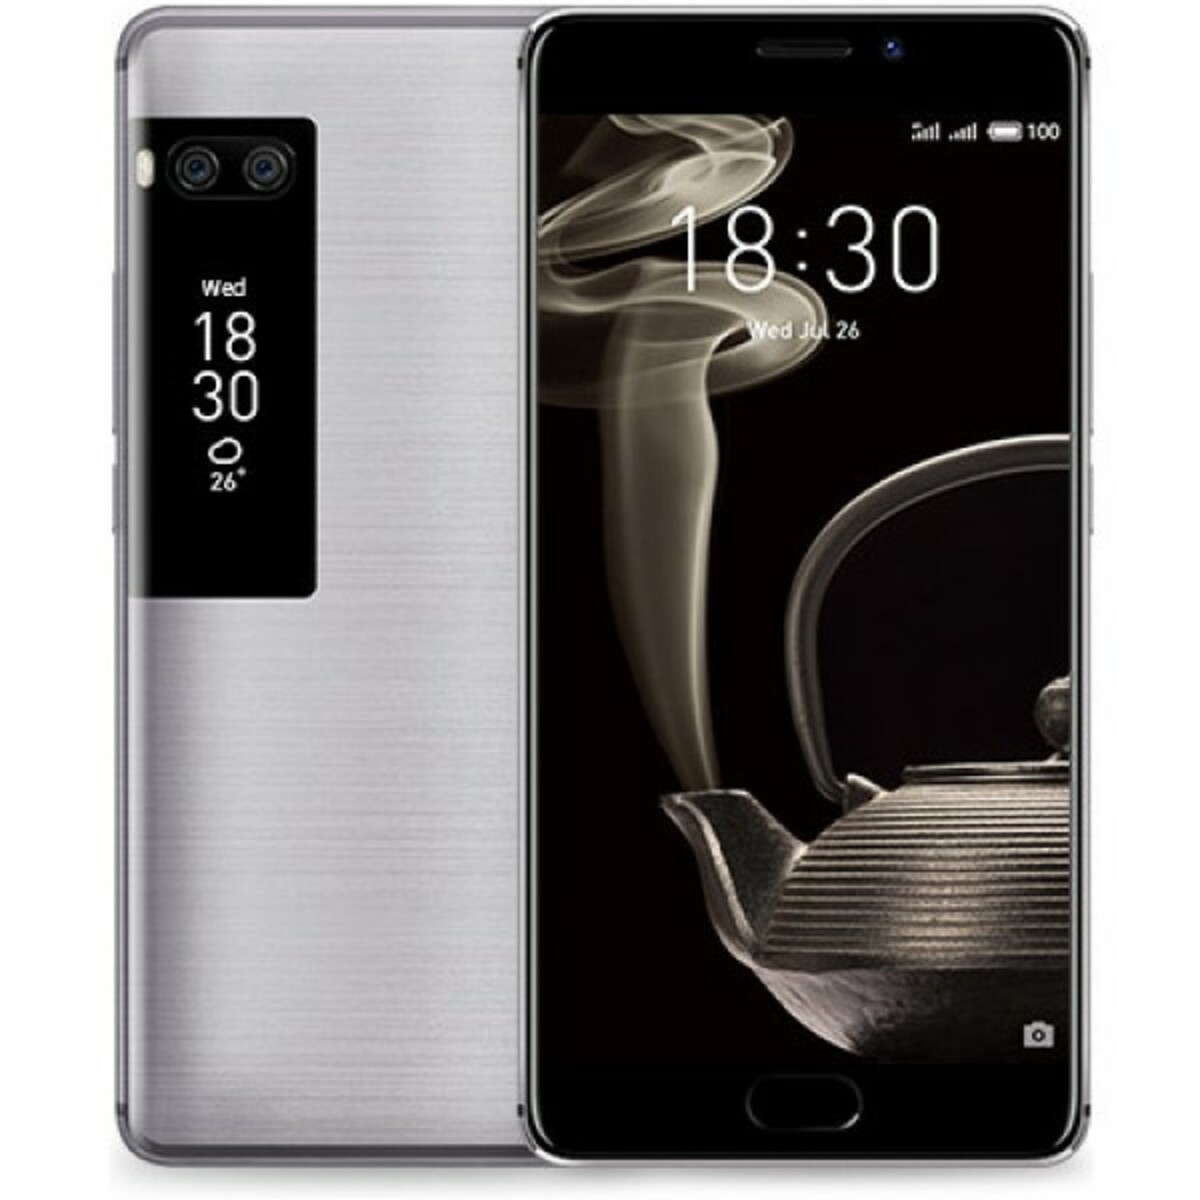 Смартфон Meizu Pro 7 Plus 64Gb (Цвет: Crystal Silver)